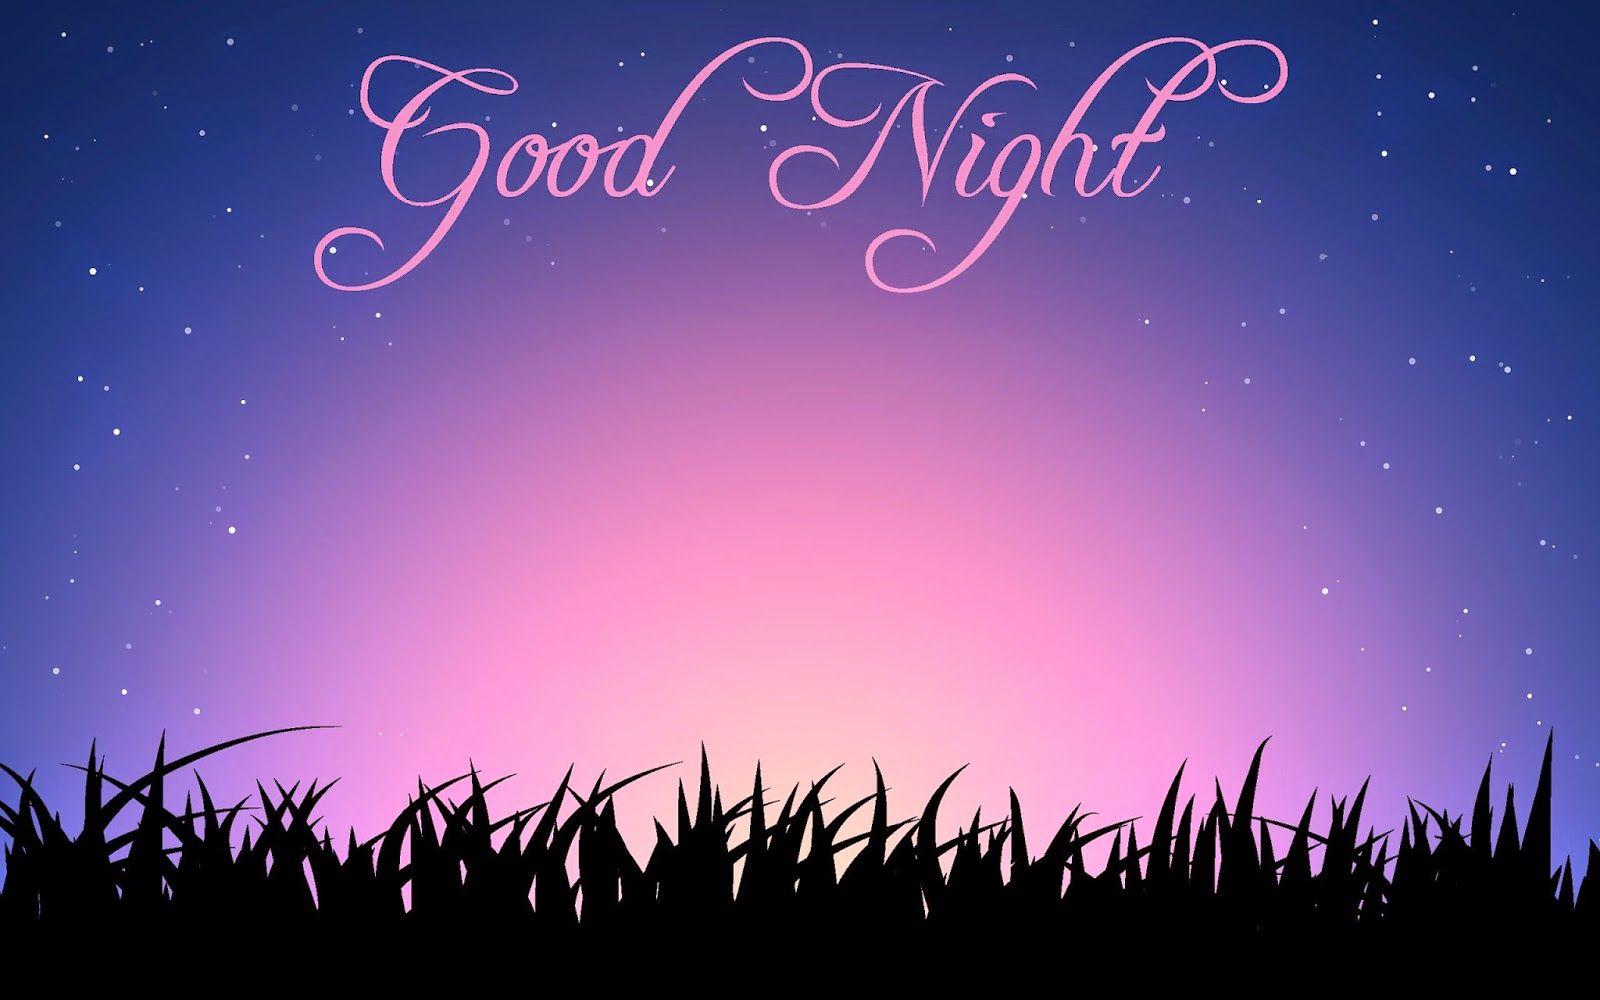 Romantic Good Night Sweet Dreams HD Image Download Free